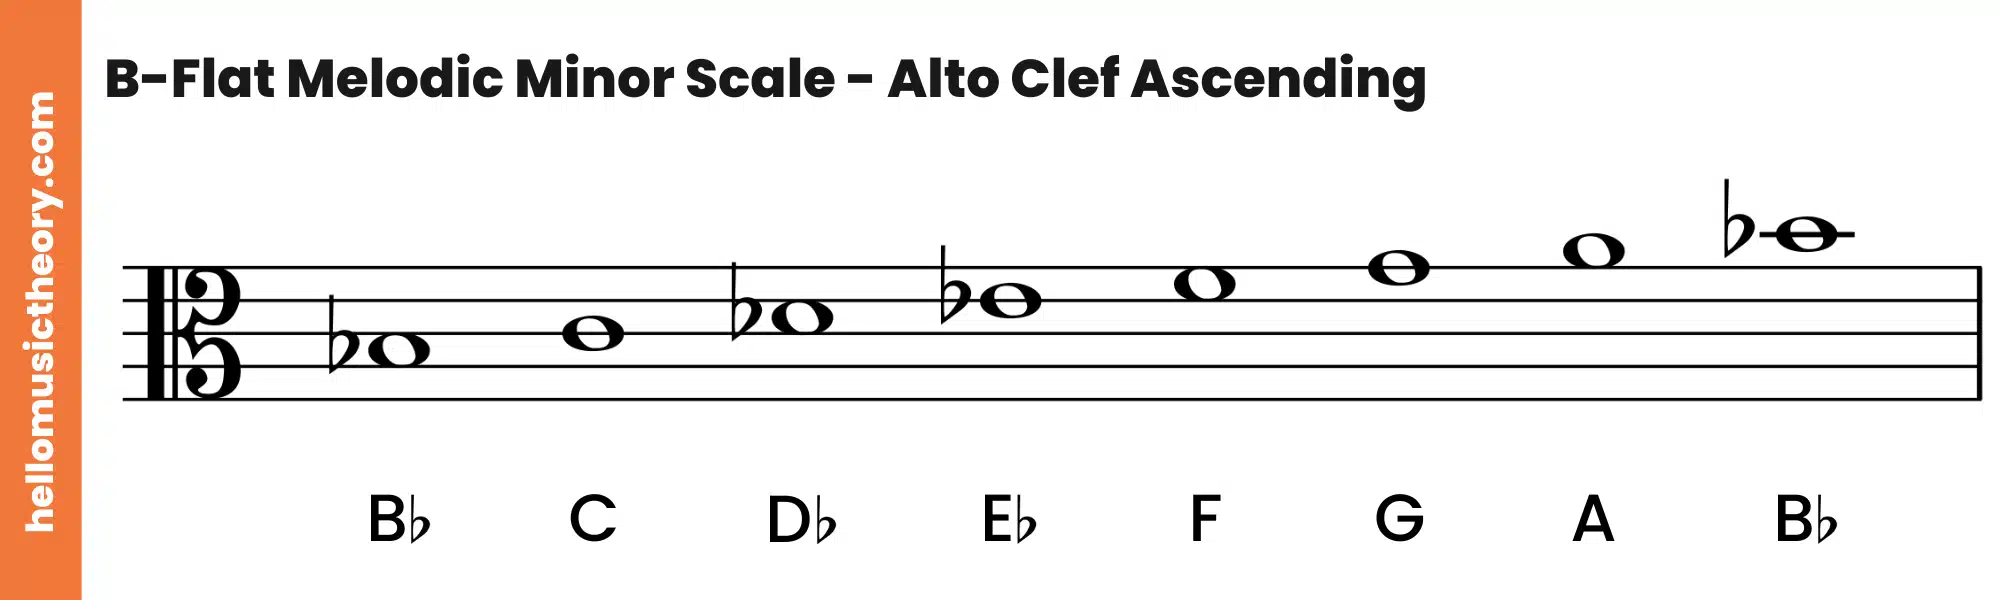 B-Flat Melodic Minor Scale Alto Clef Ascending